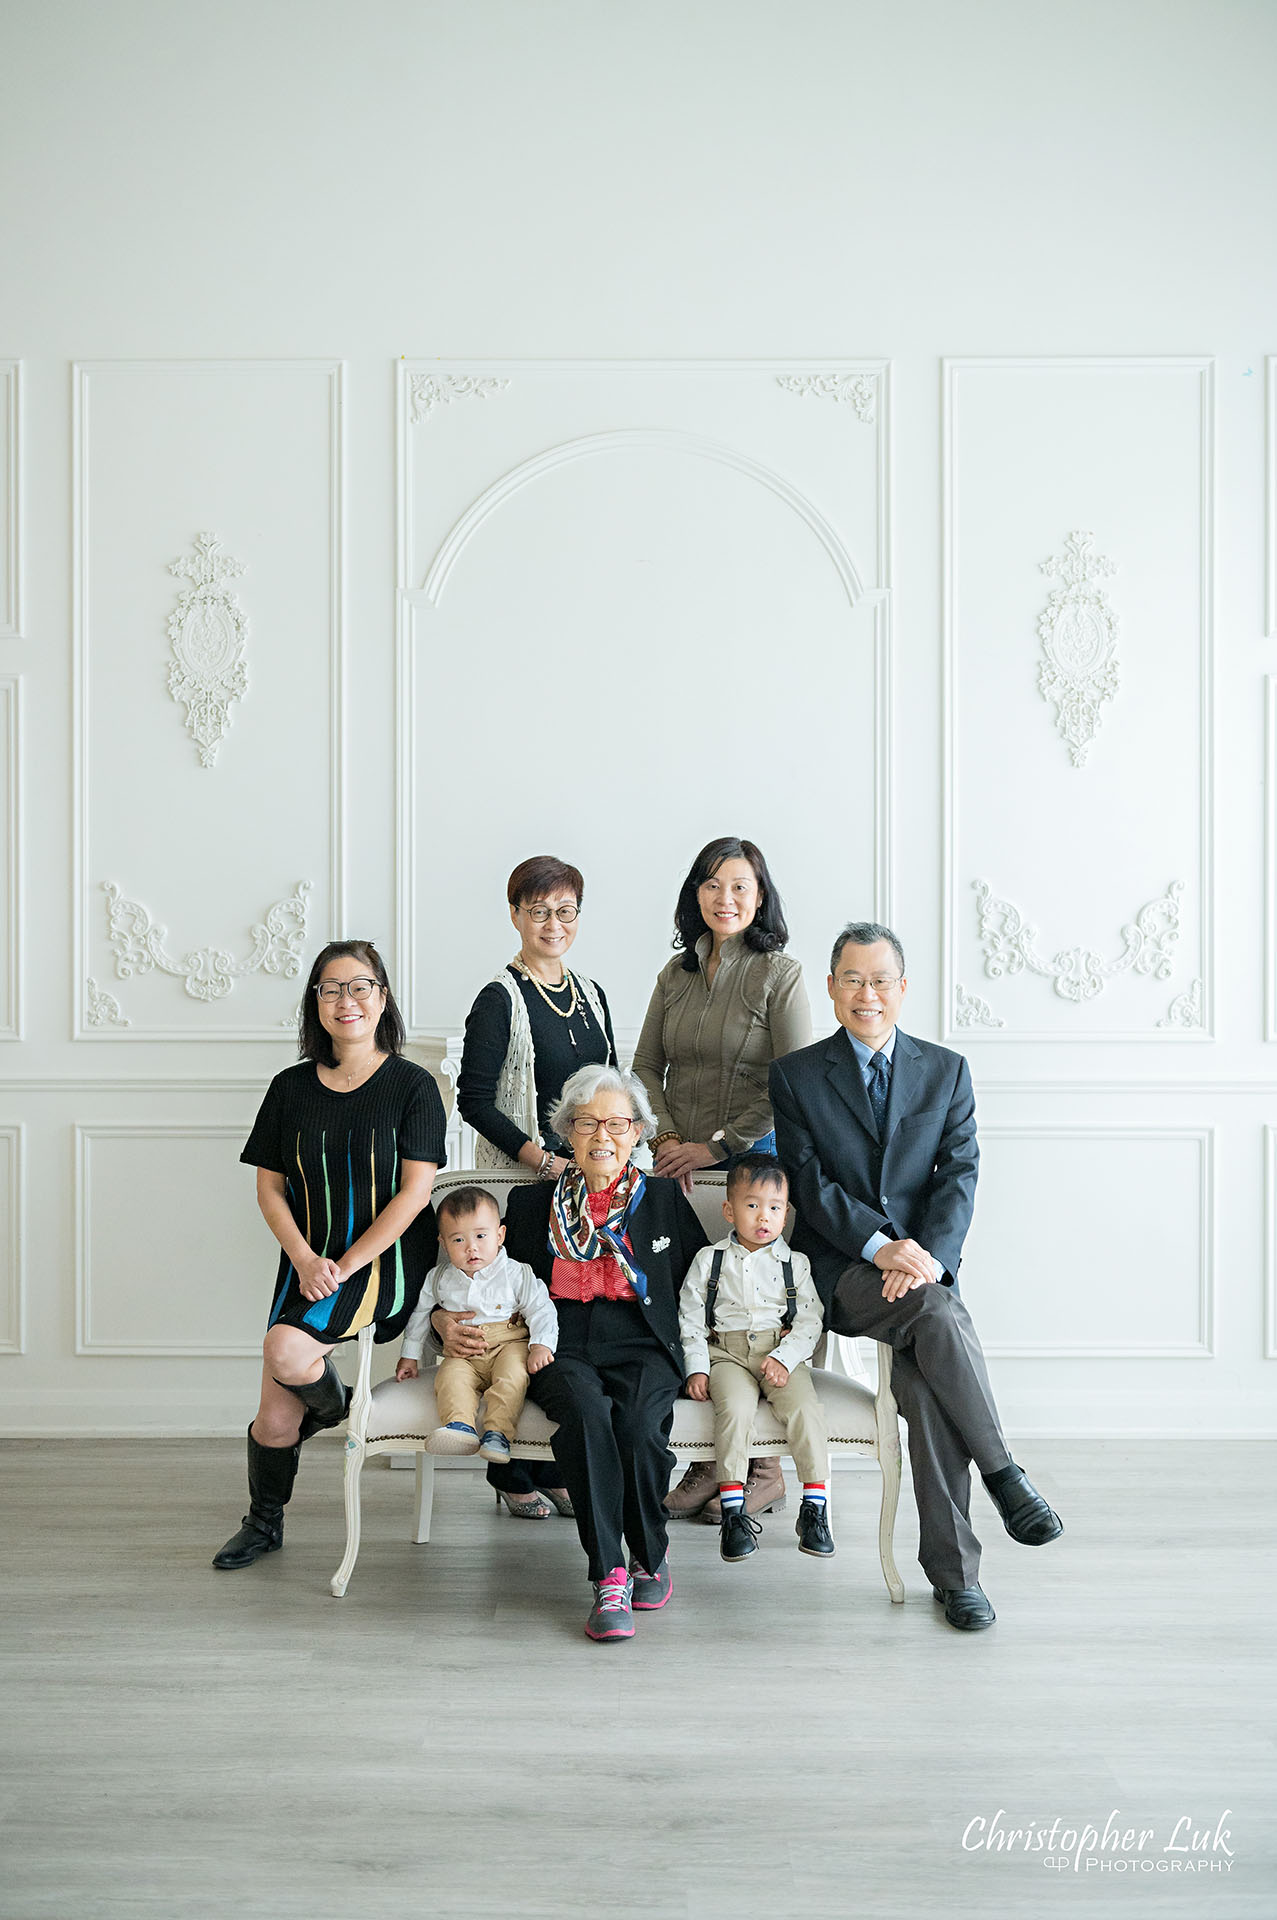 Great Grandmother Aunts Uncles Grandchildren Extended Family Photo Portrait 